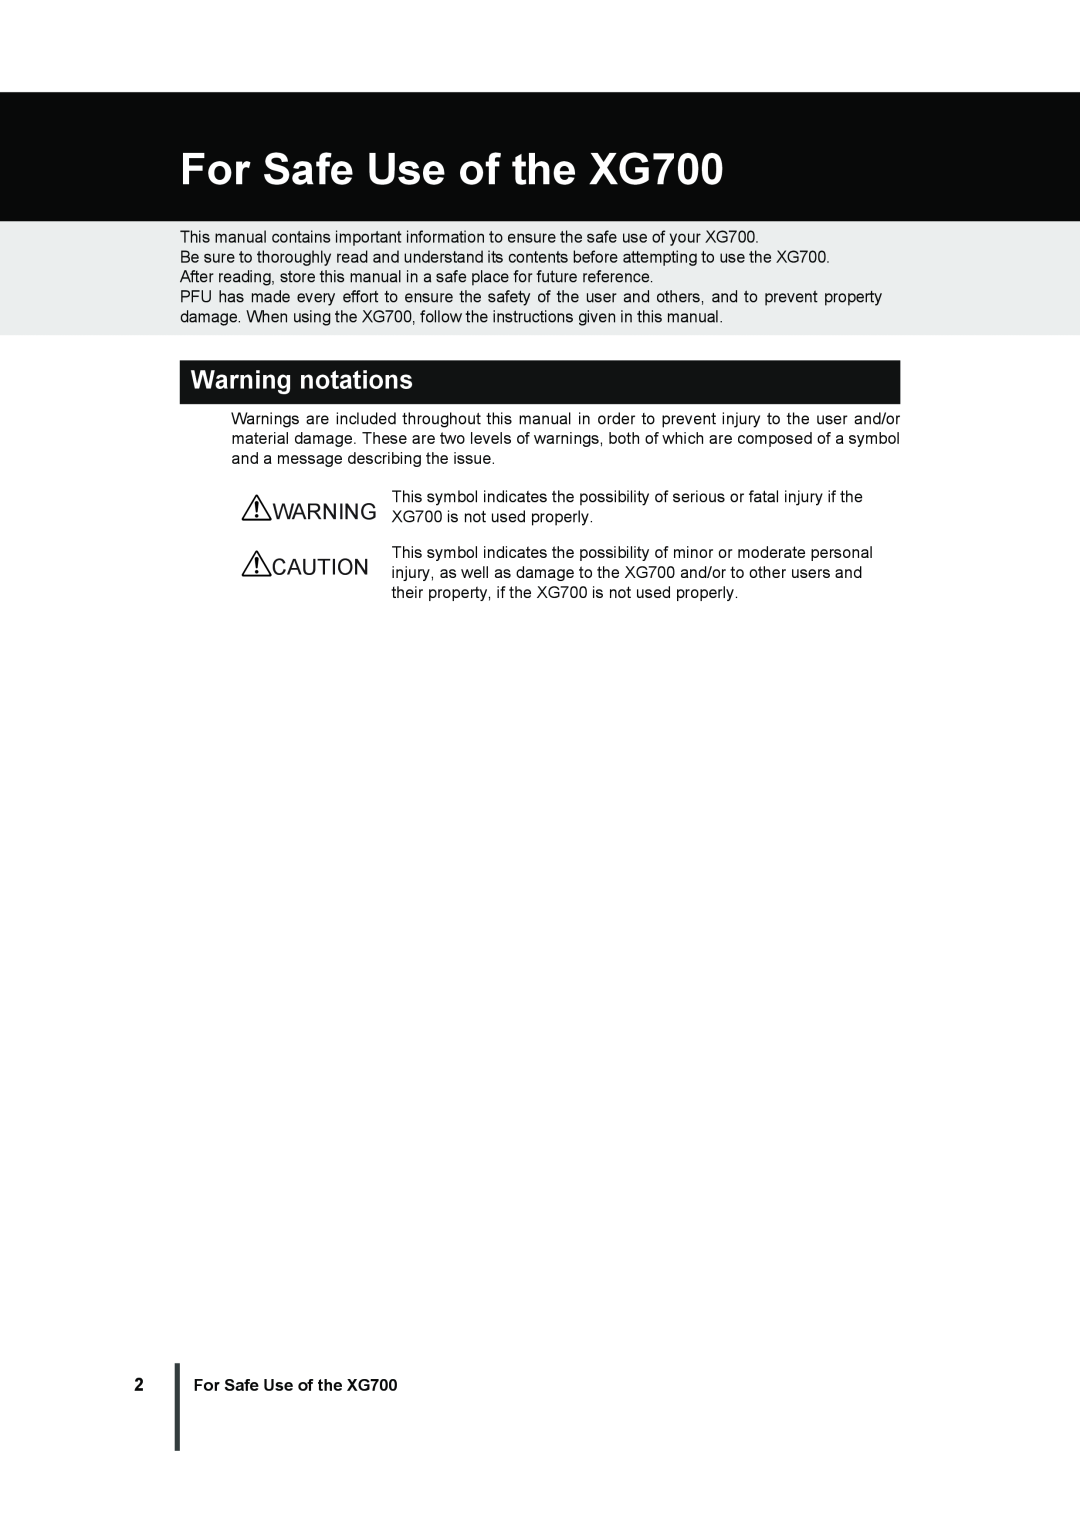 Fujitsu manual For Safe Use of the XG700, Warning notations 